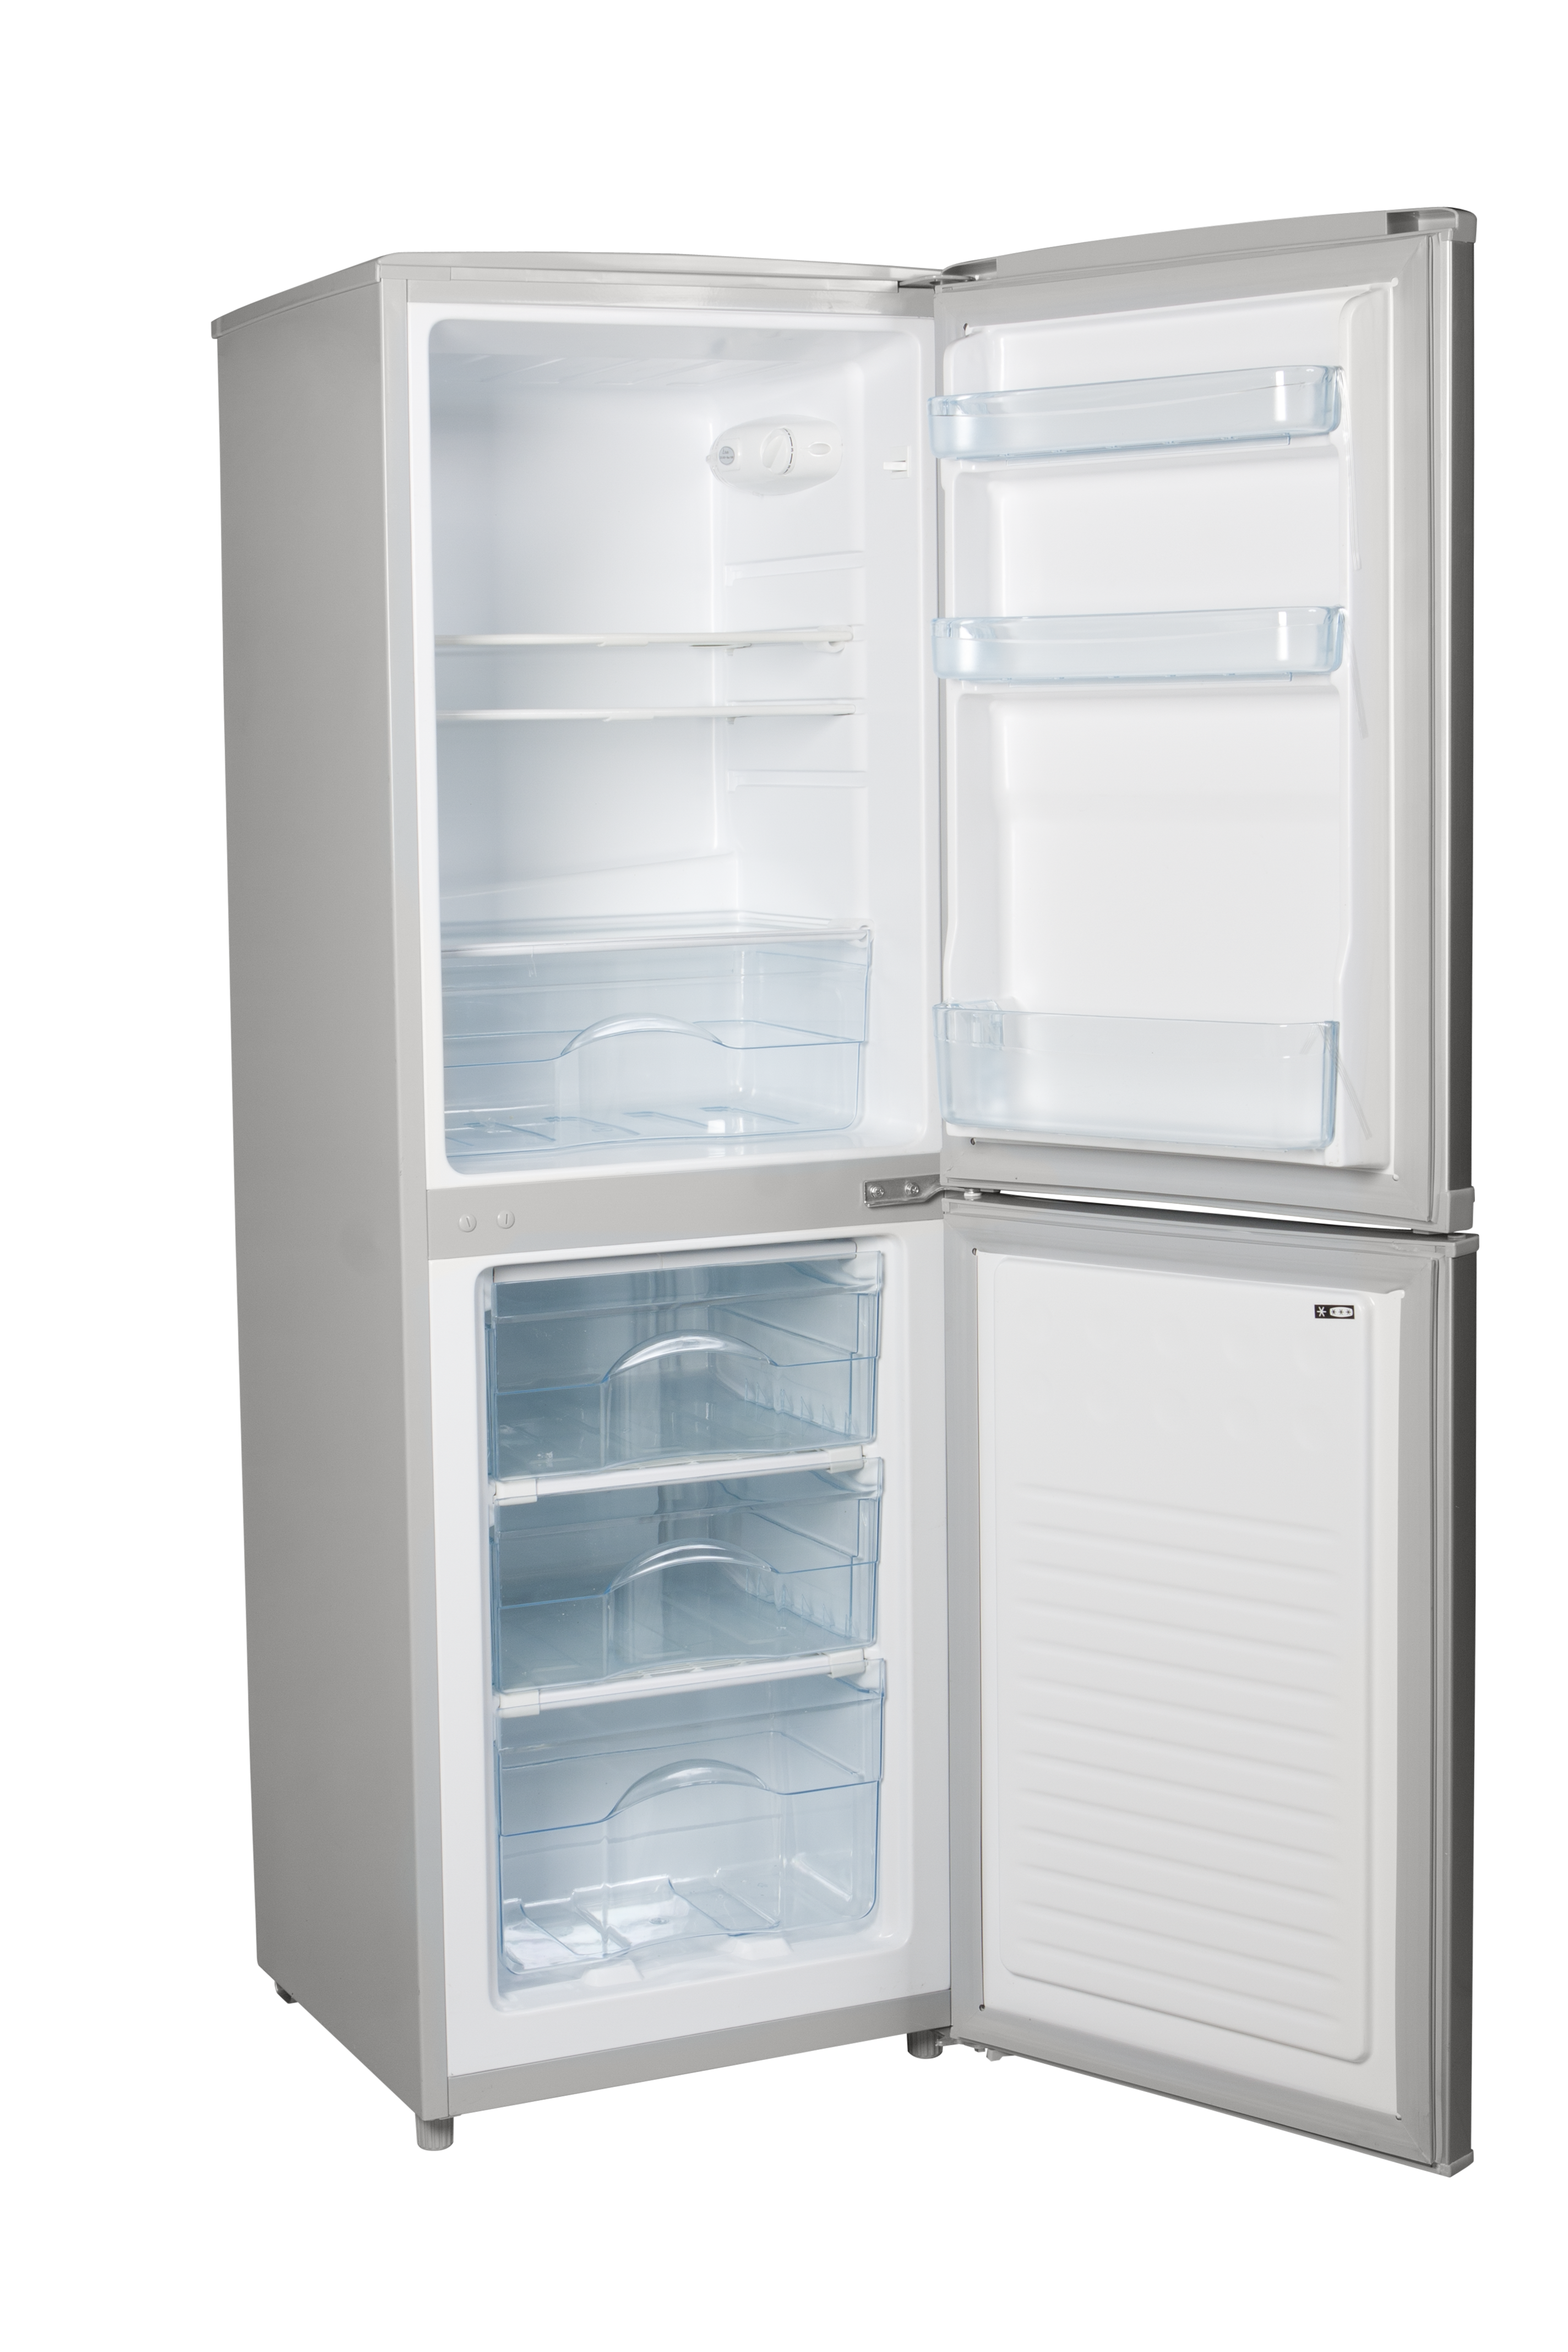 Refrigerator PNG images Download 